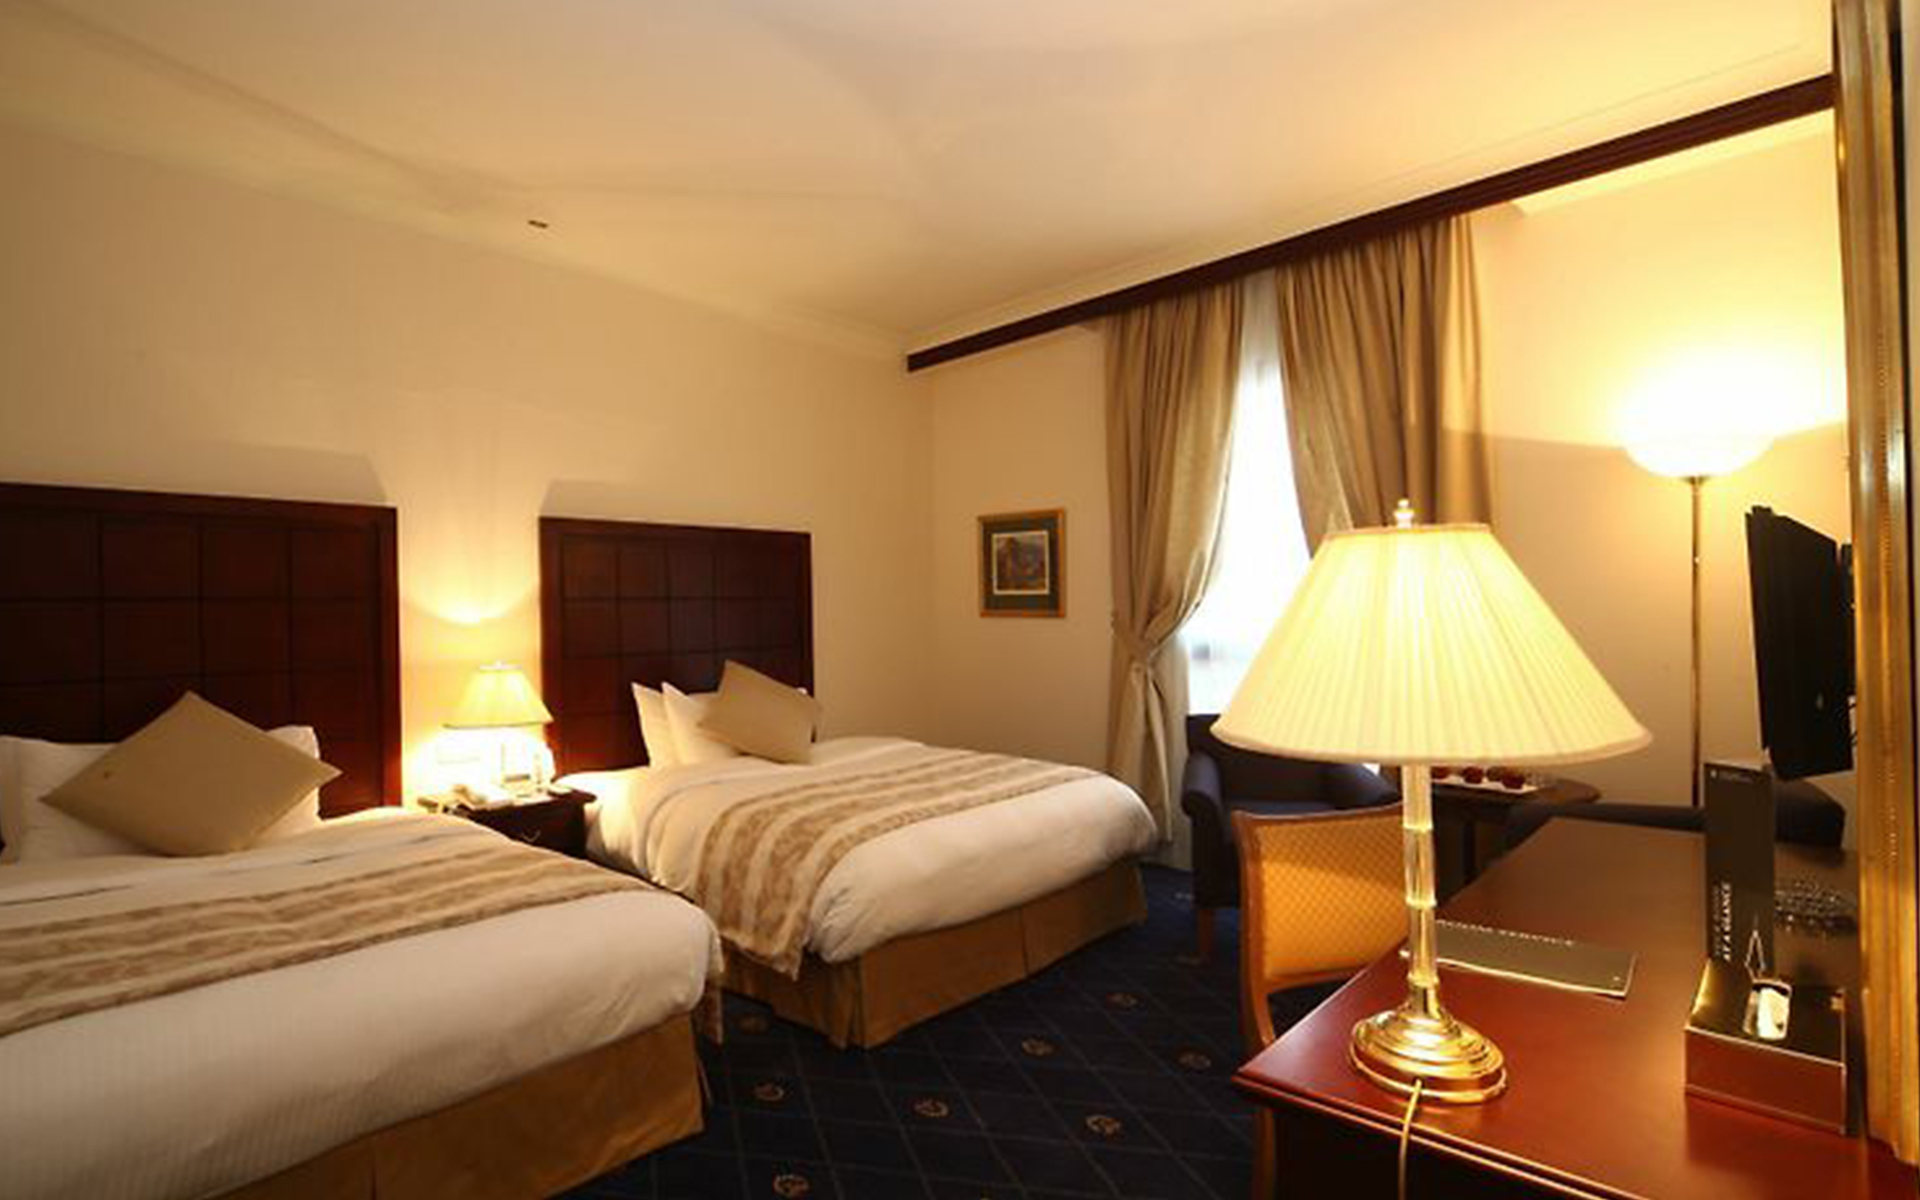 Hotel Dar Al Hijra “InterContinental”.